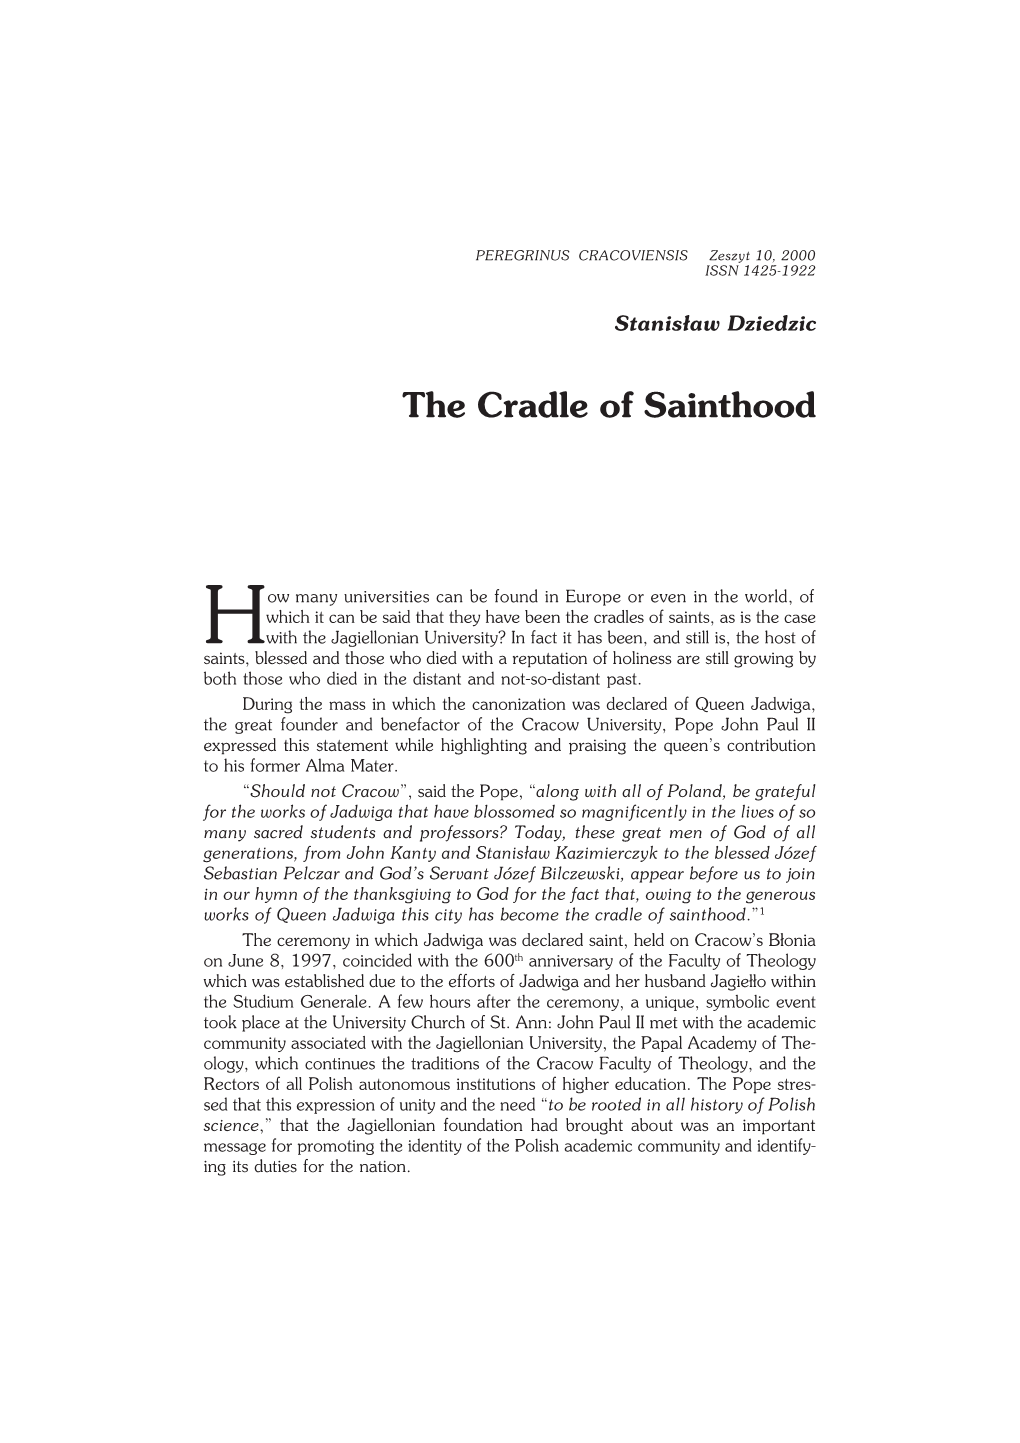 The Cradle of Sainthood